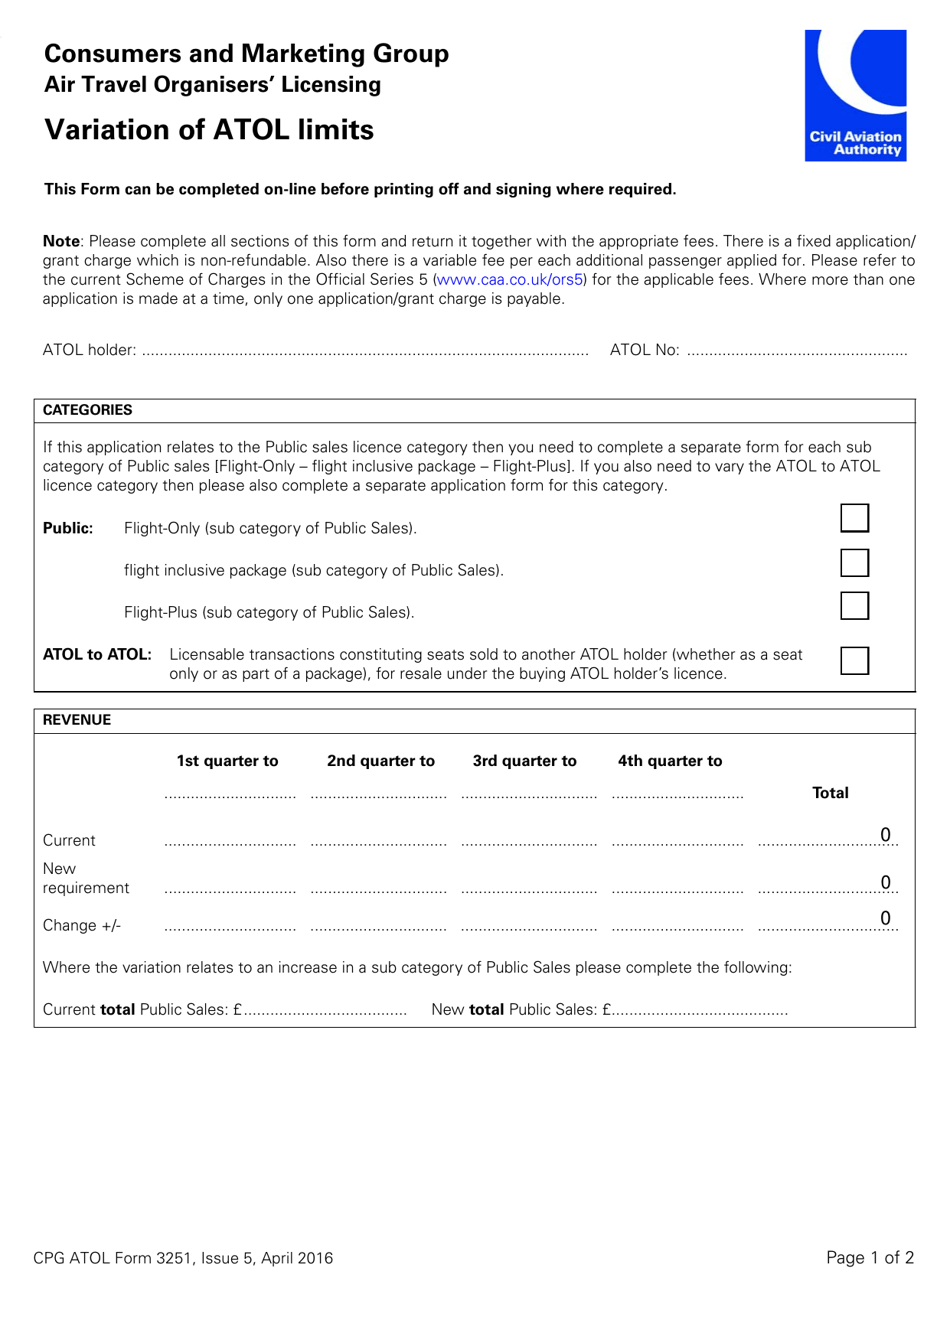 CPG ATOL Form 3251 Variation of Atol Limits - United Kingdom, Page 1